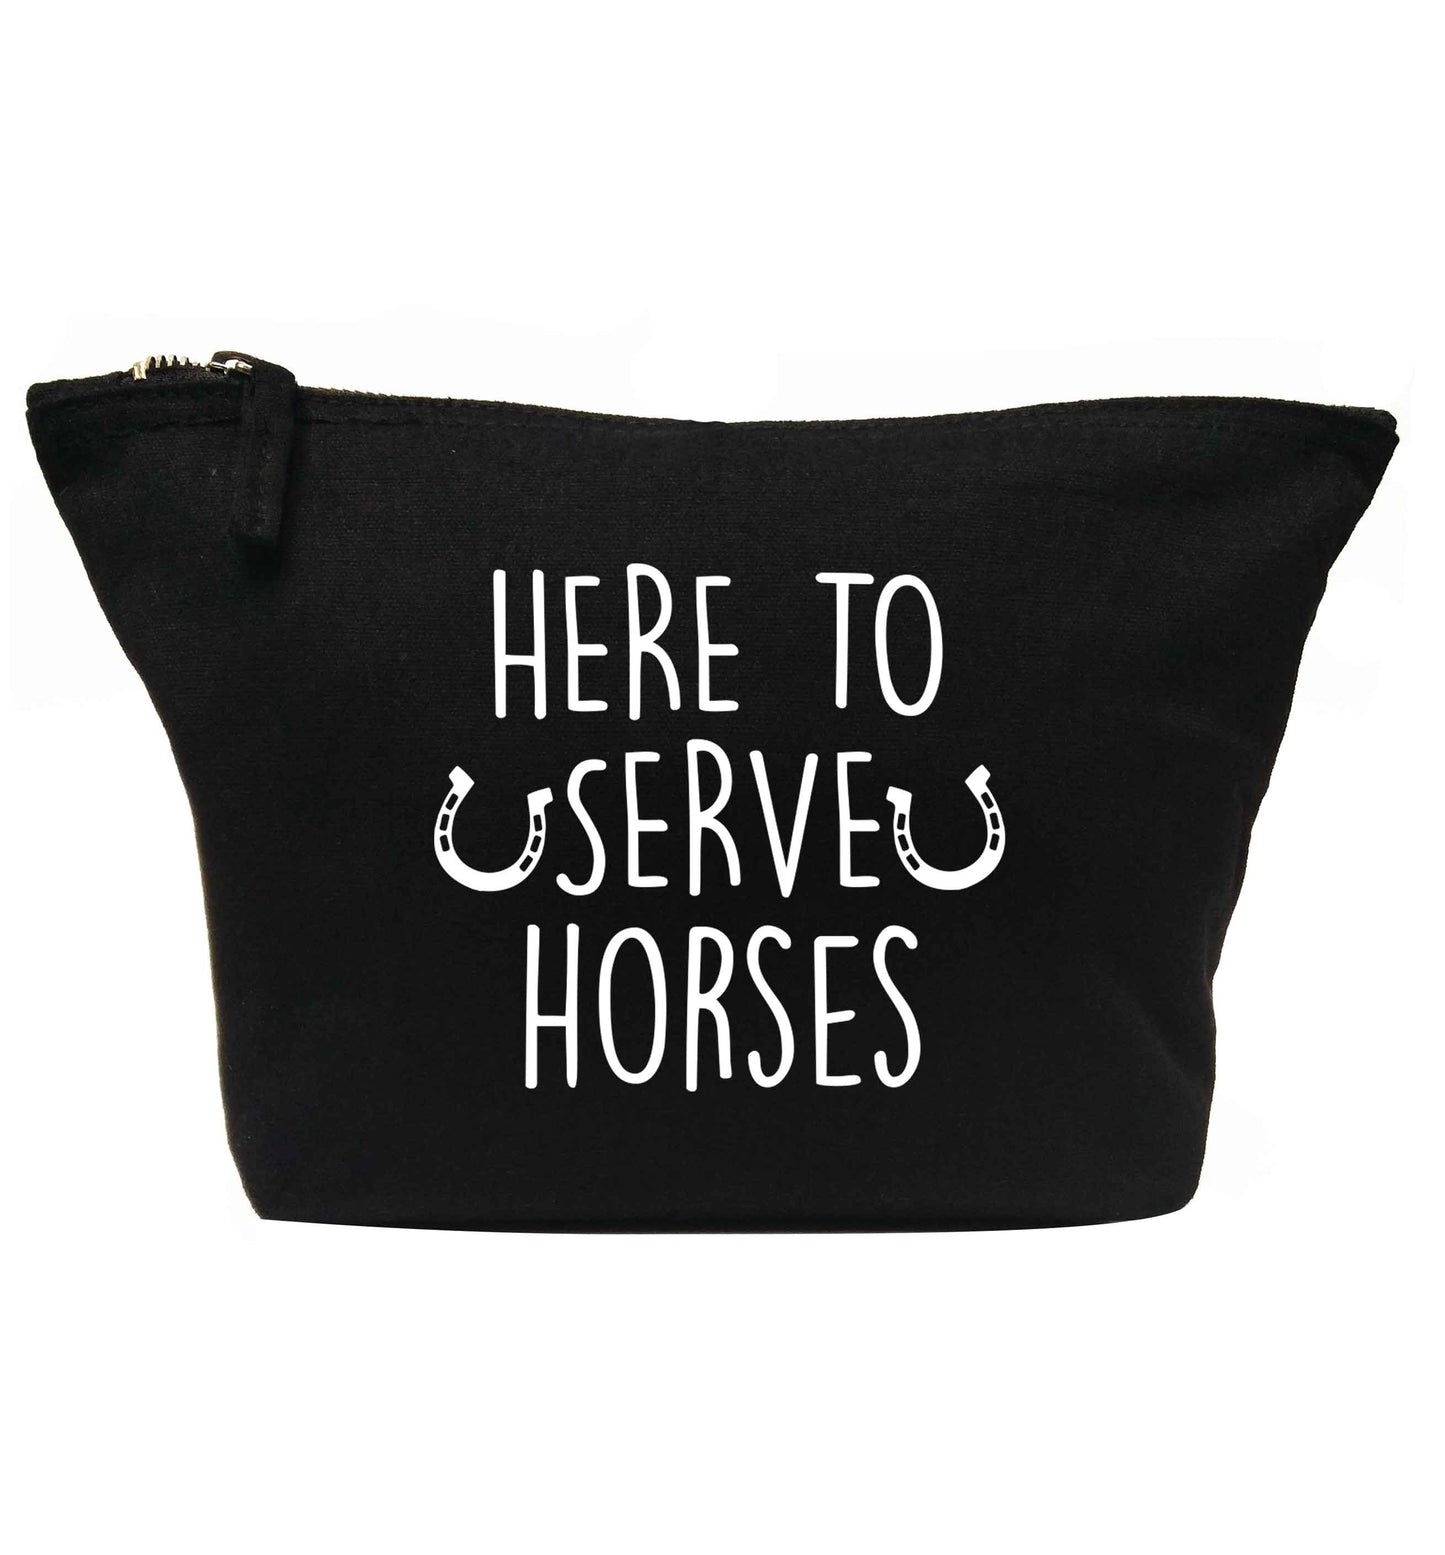 Here to serve horses | Makeup / wash bag